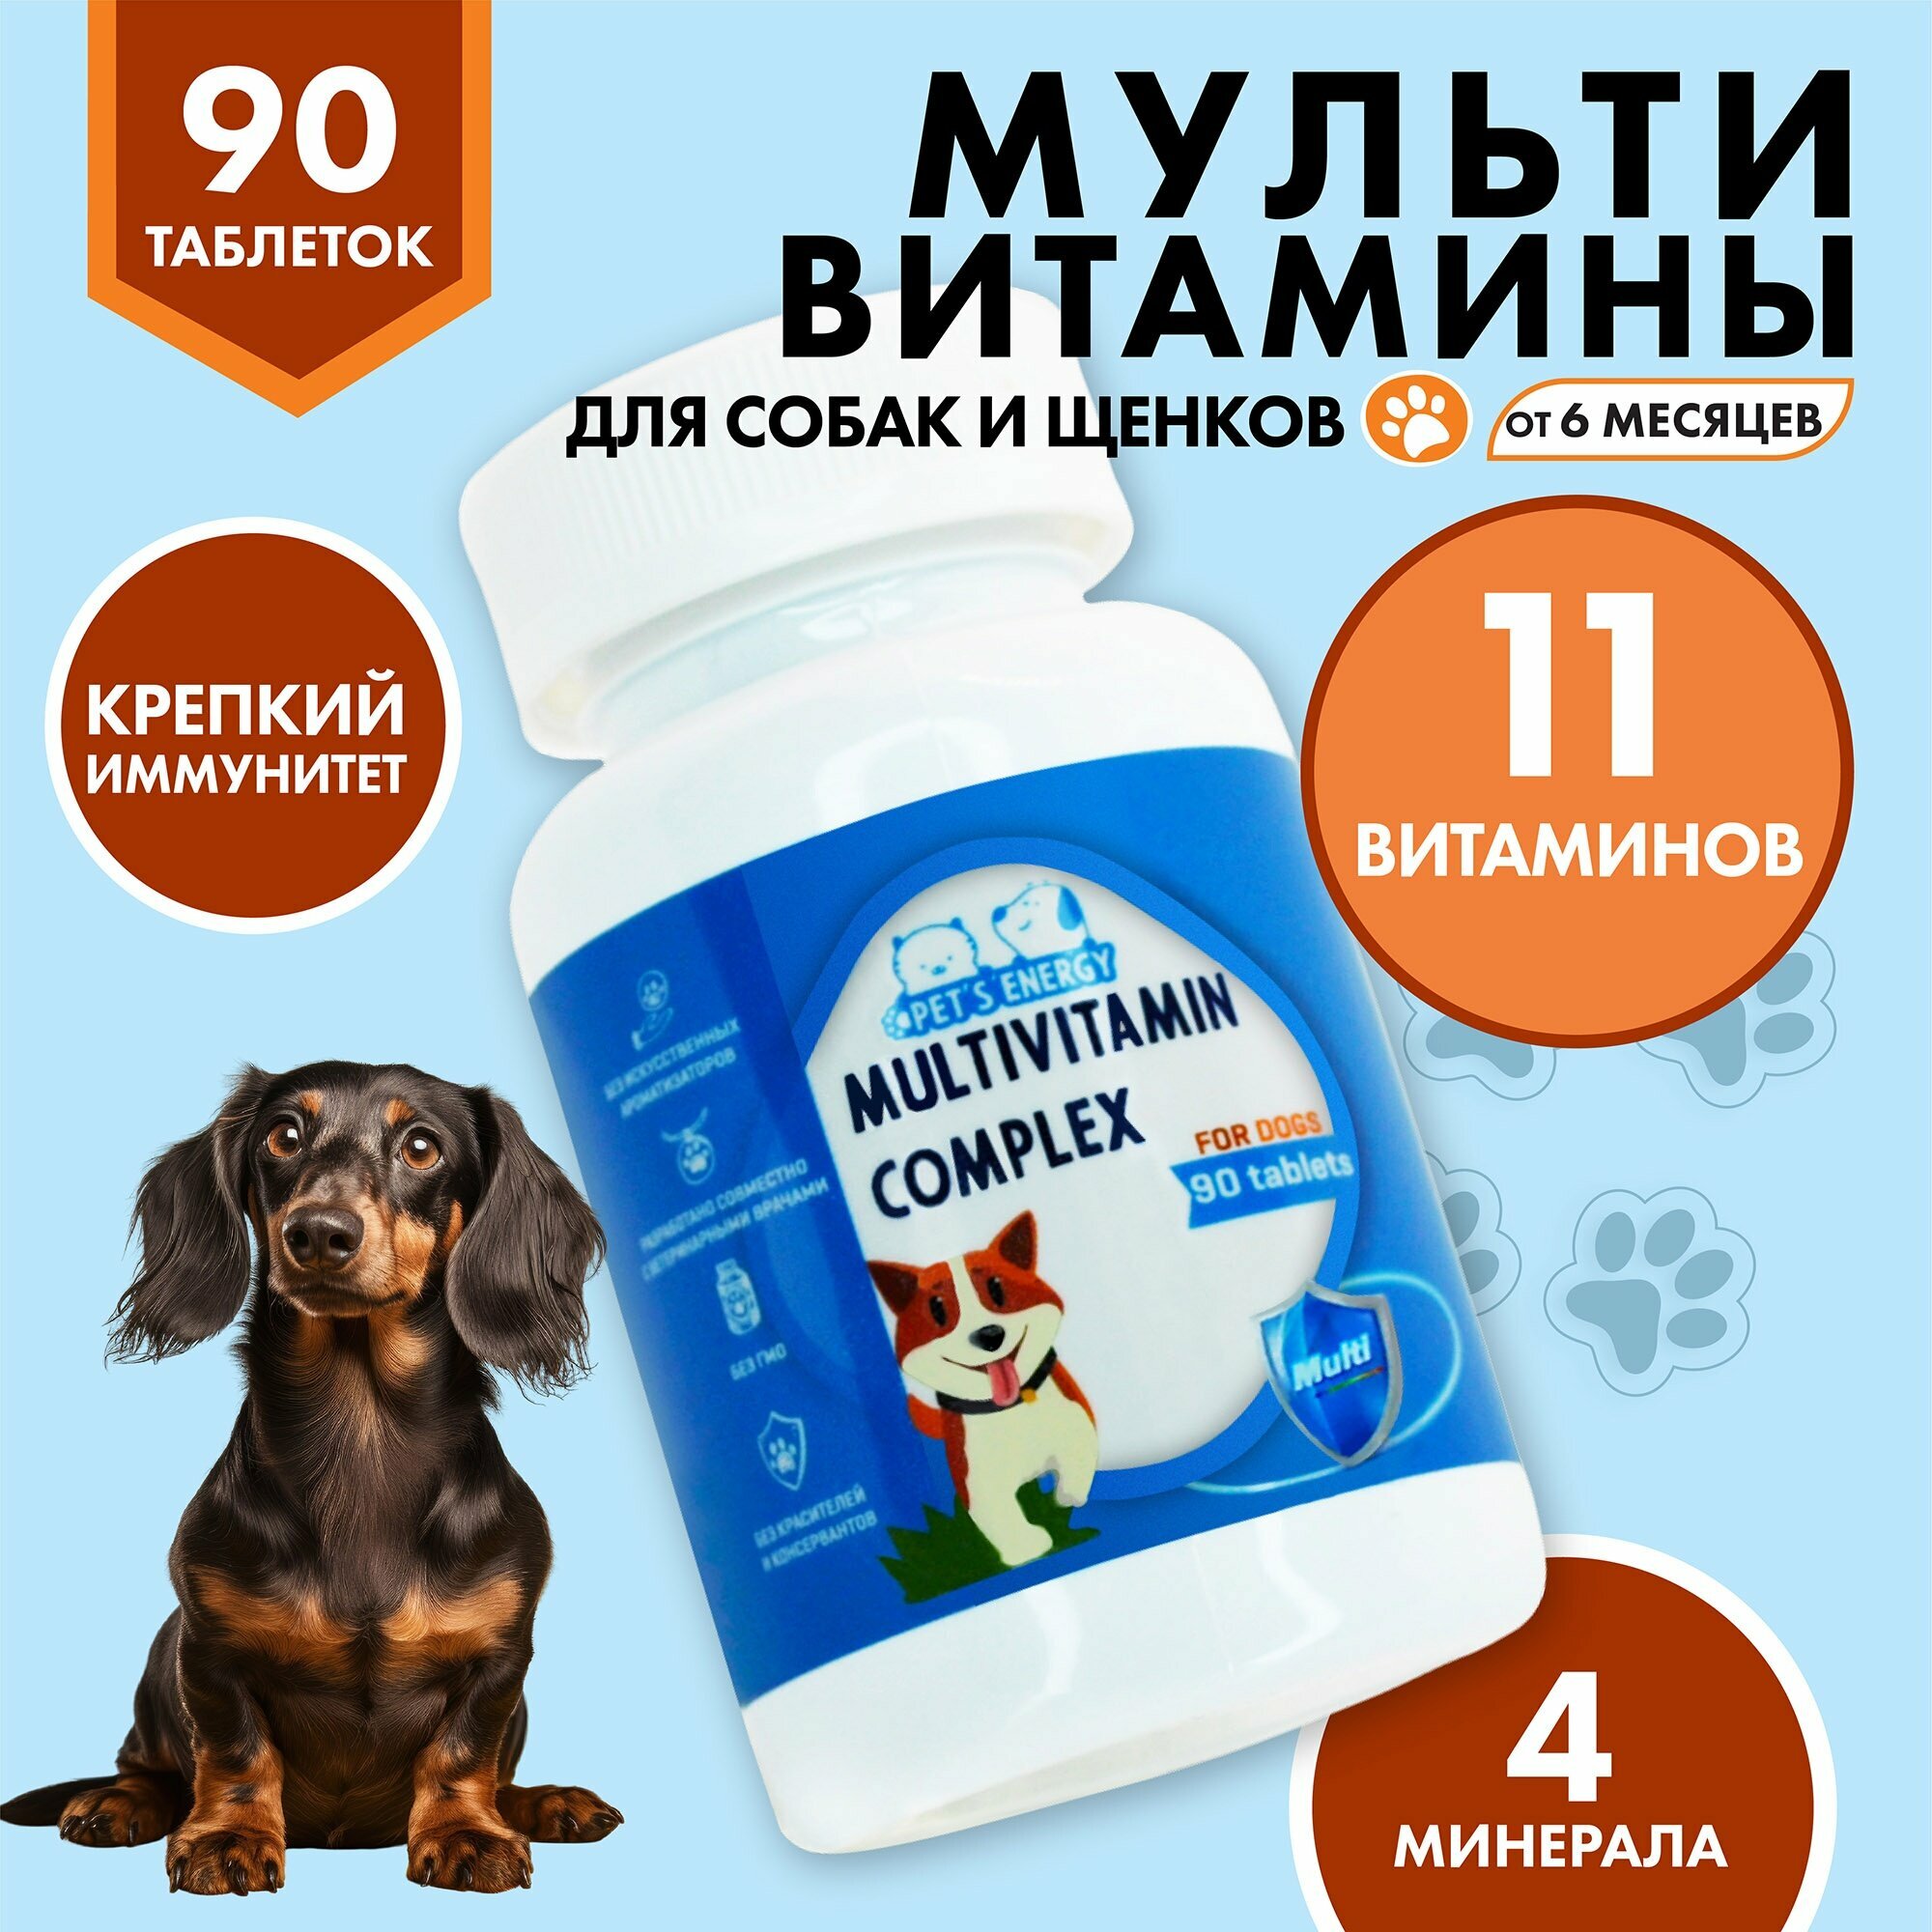 Витамины для собак 90 таб. Мультивитамины. Лакомство, витаминизированное. Кормовая добавка